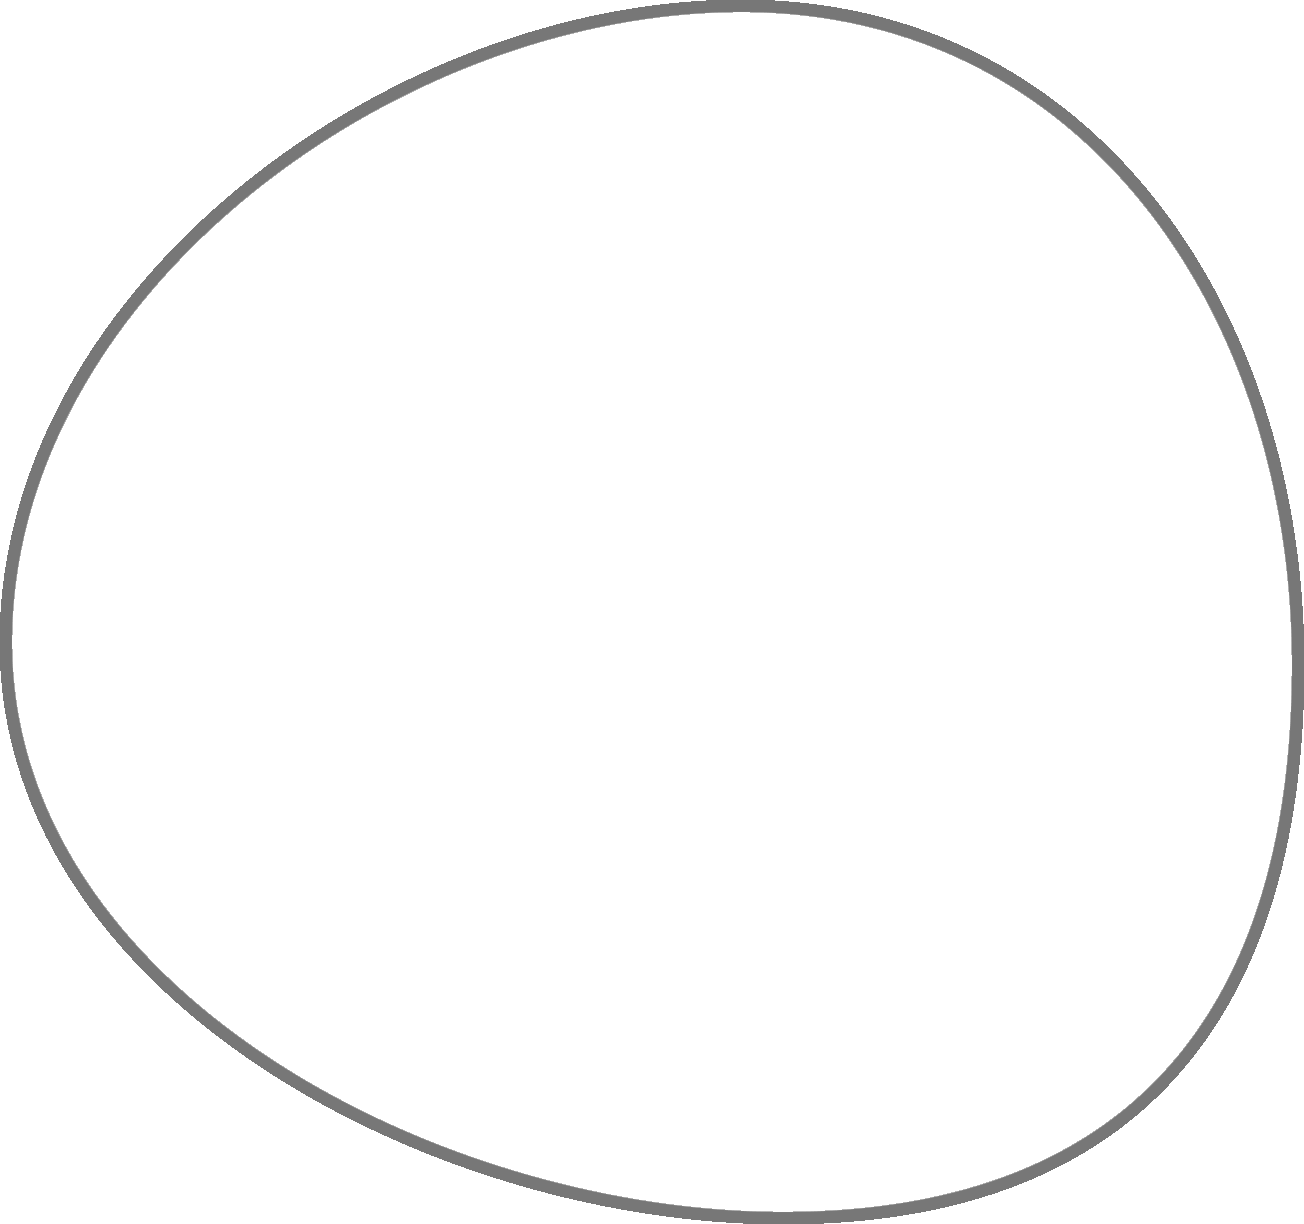 ellipse image